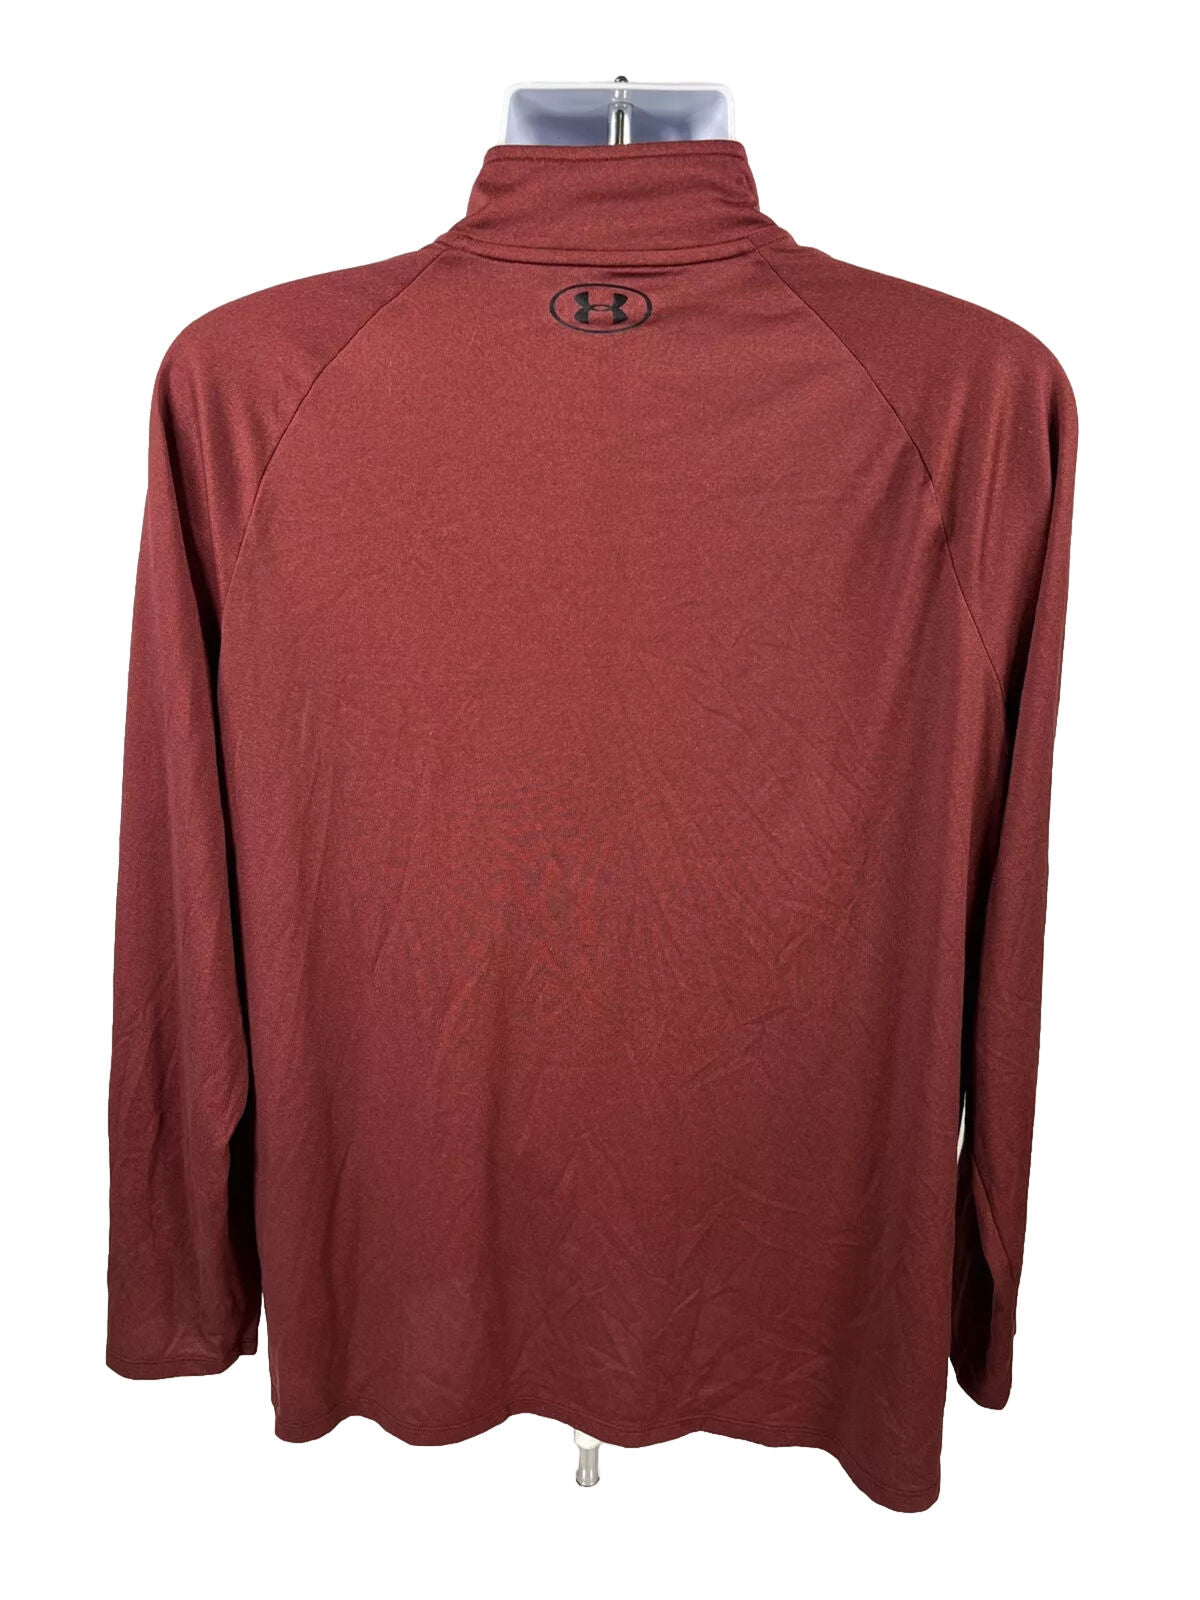 Under Armour Men's Dark Red HeatGear Long Sleeve Athletic Shirt - XL